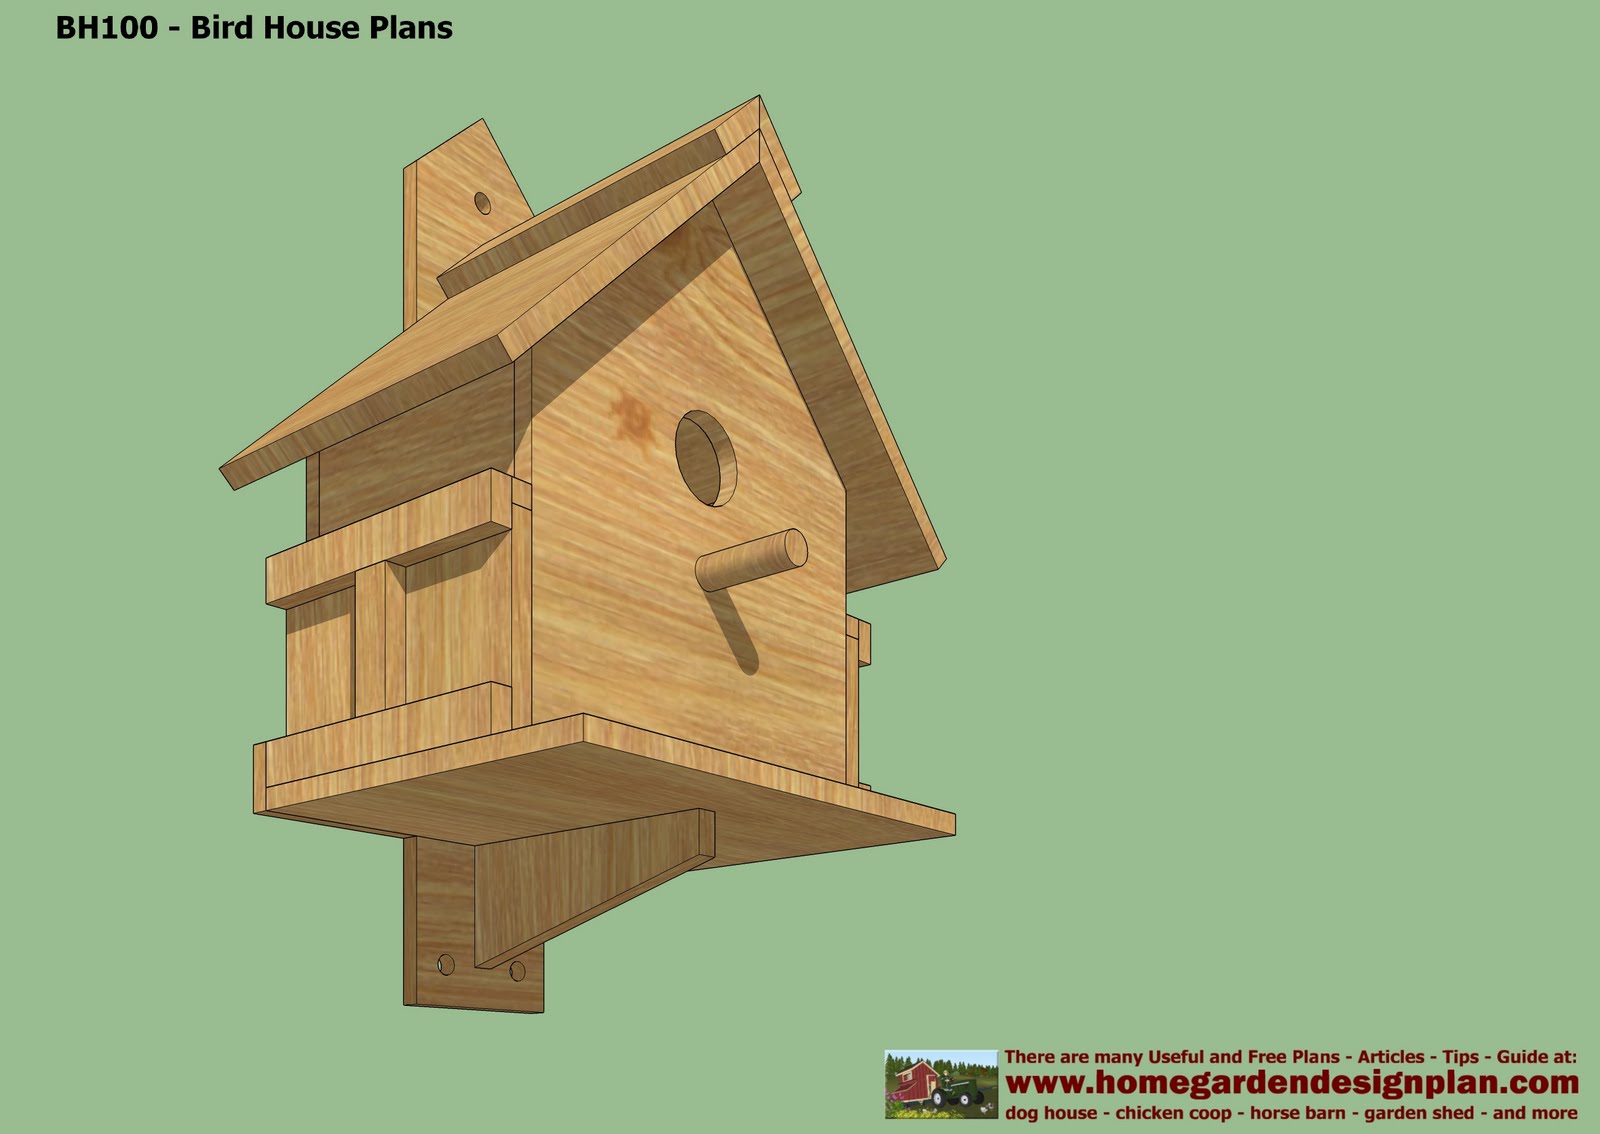  Bird House Plans Free  Free Bird House Plans  How To Build A Bird